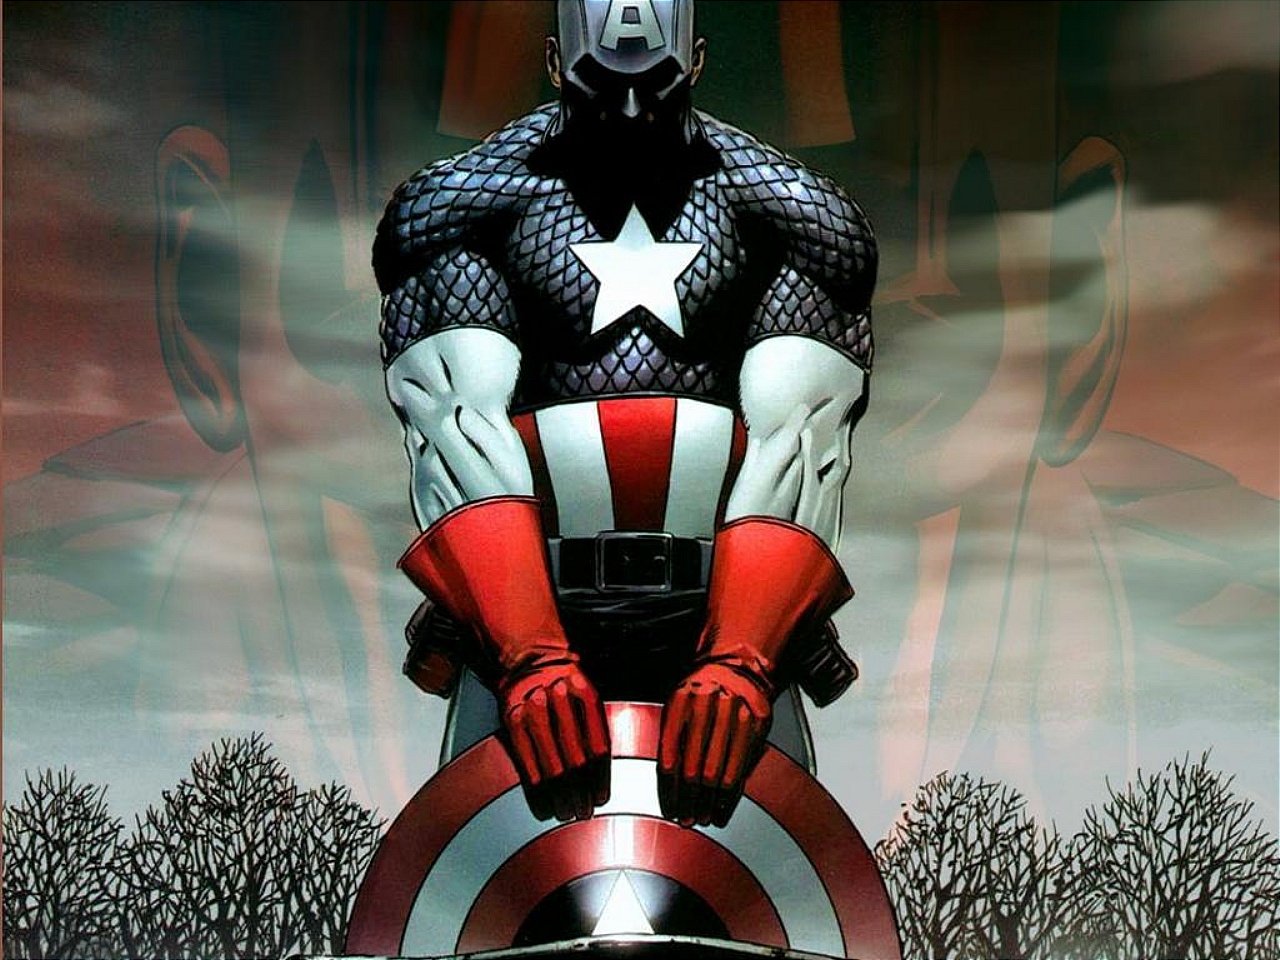 http://4.bp.blogspot.com/-nwaQ8sX0cDA/T2ZnTkrWvbI/AAAAAAAADLU/lBZSr2My4pU/s1600/Captain+America+1.jpg